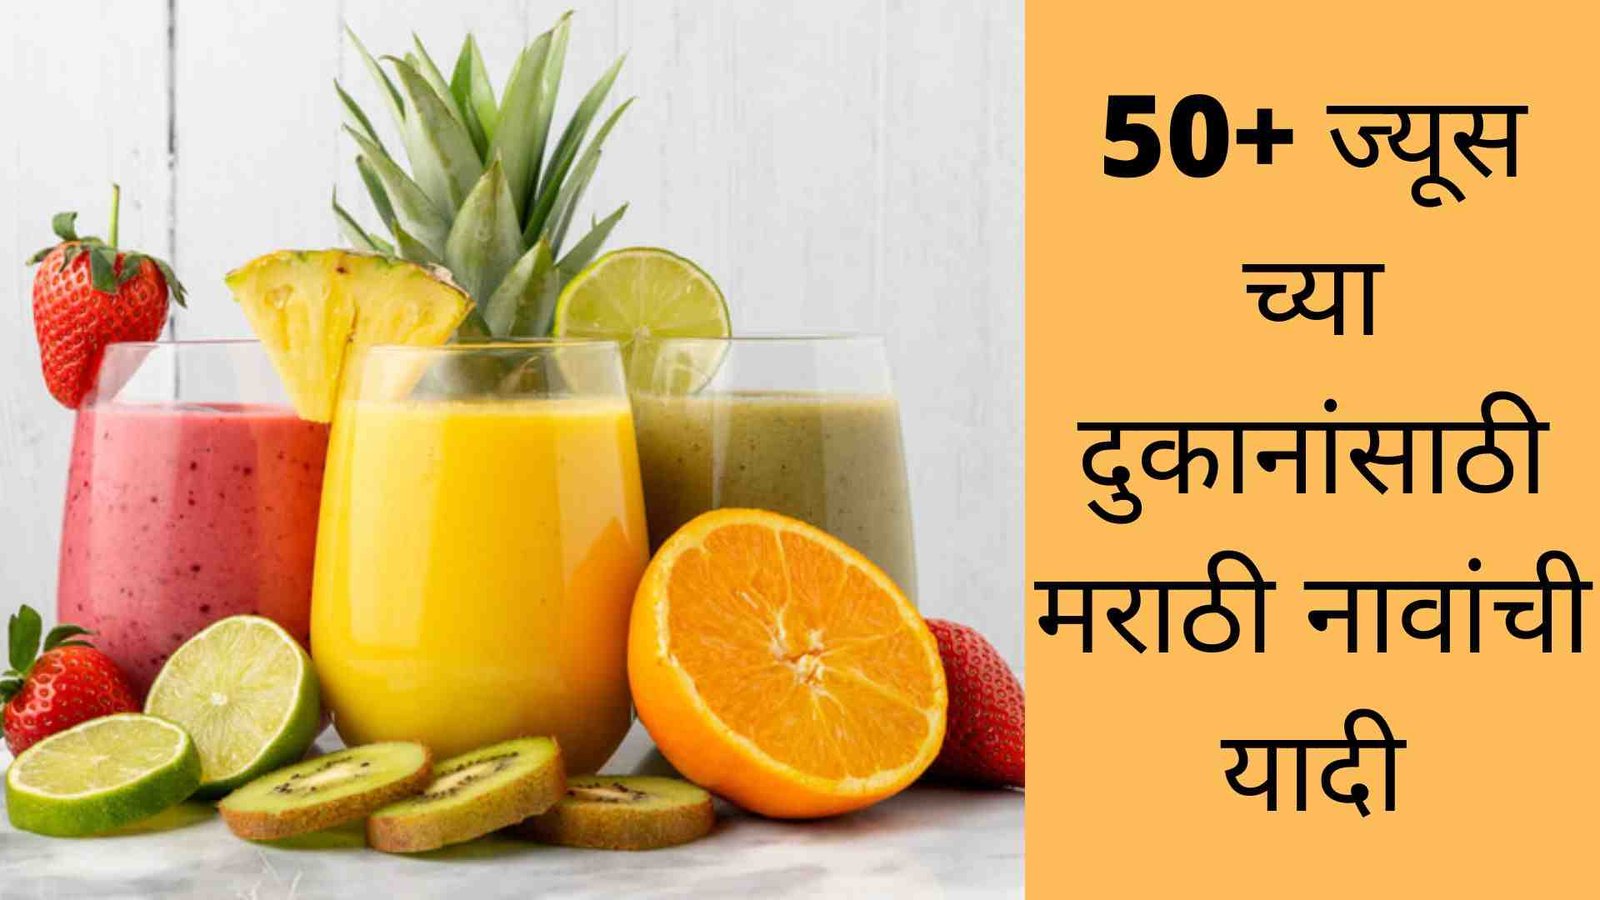 Juice Shop Names Ideas In Marathi